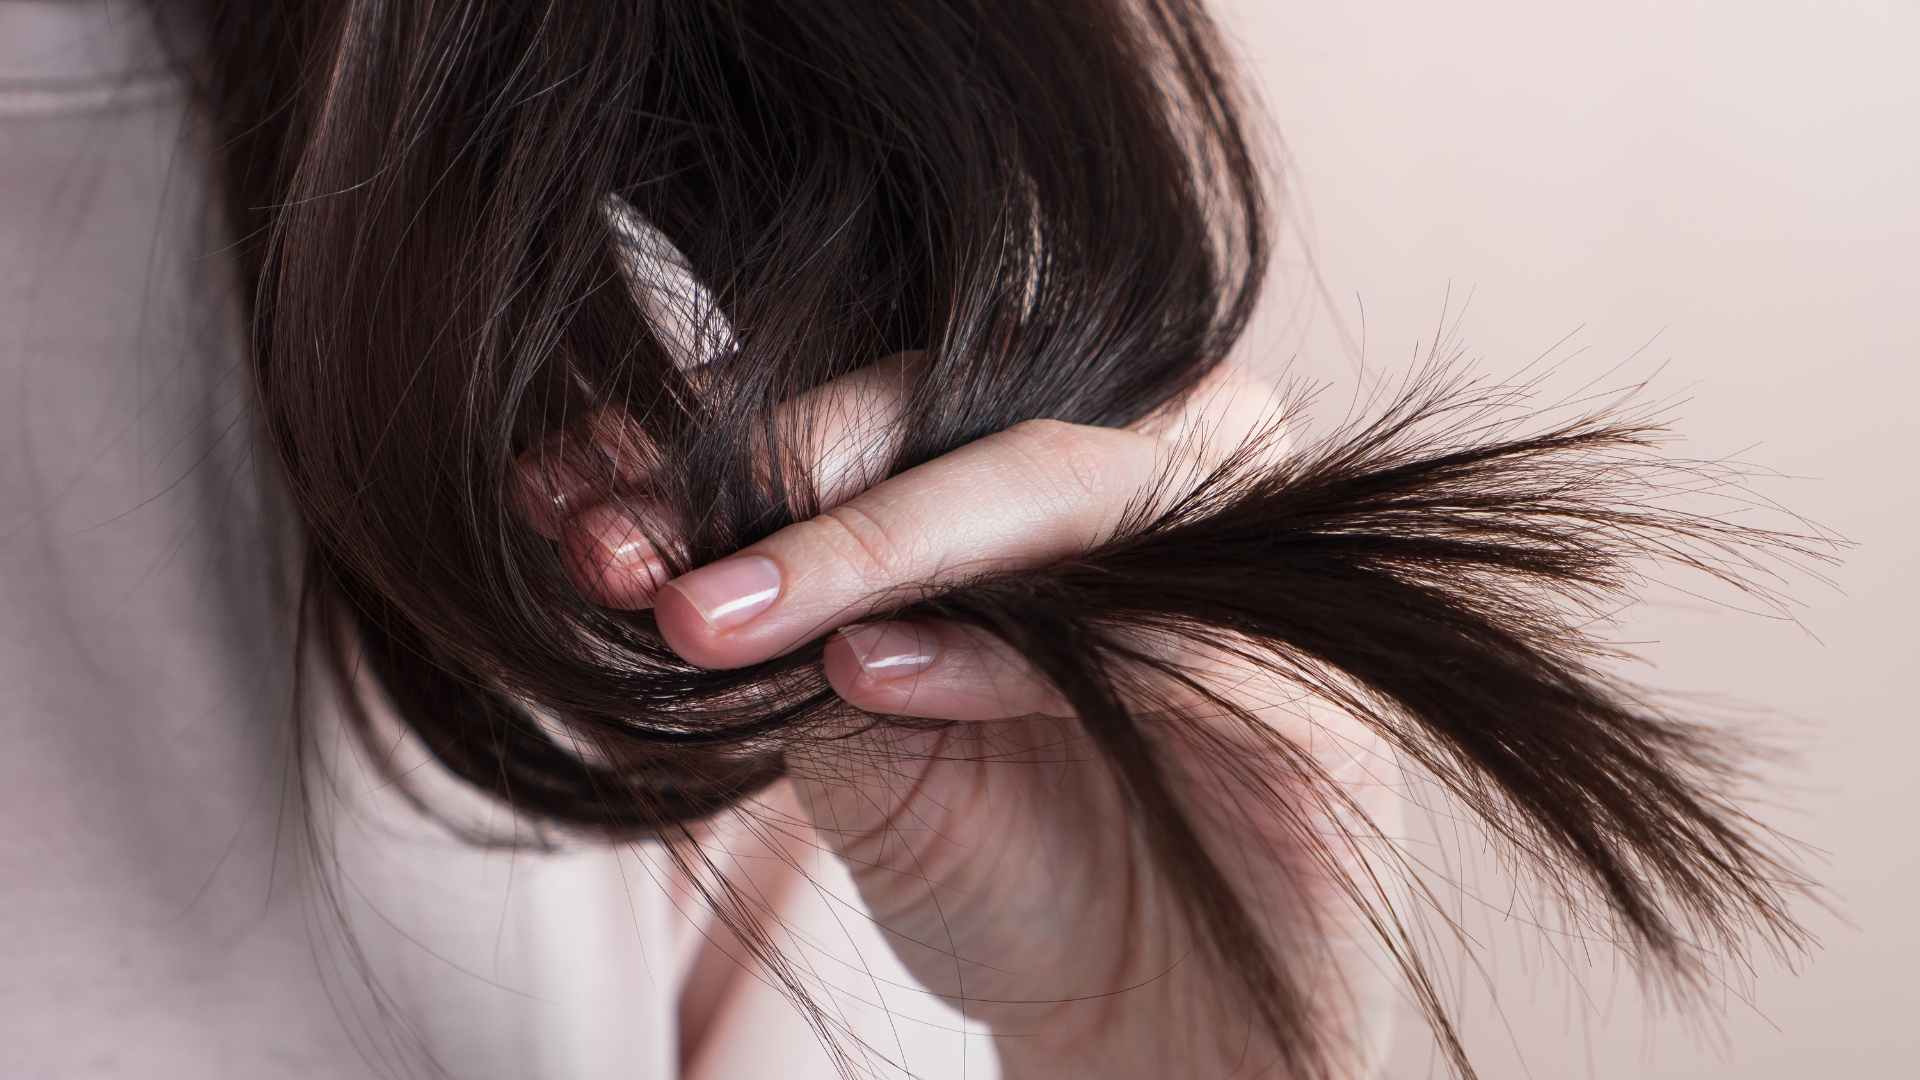 Showing split ends in hair